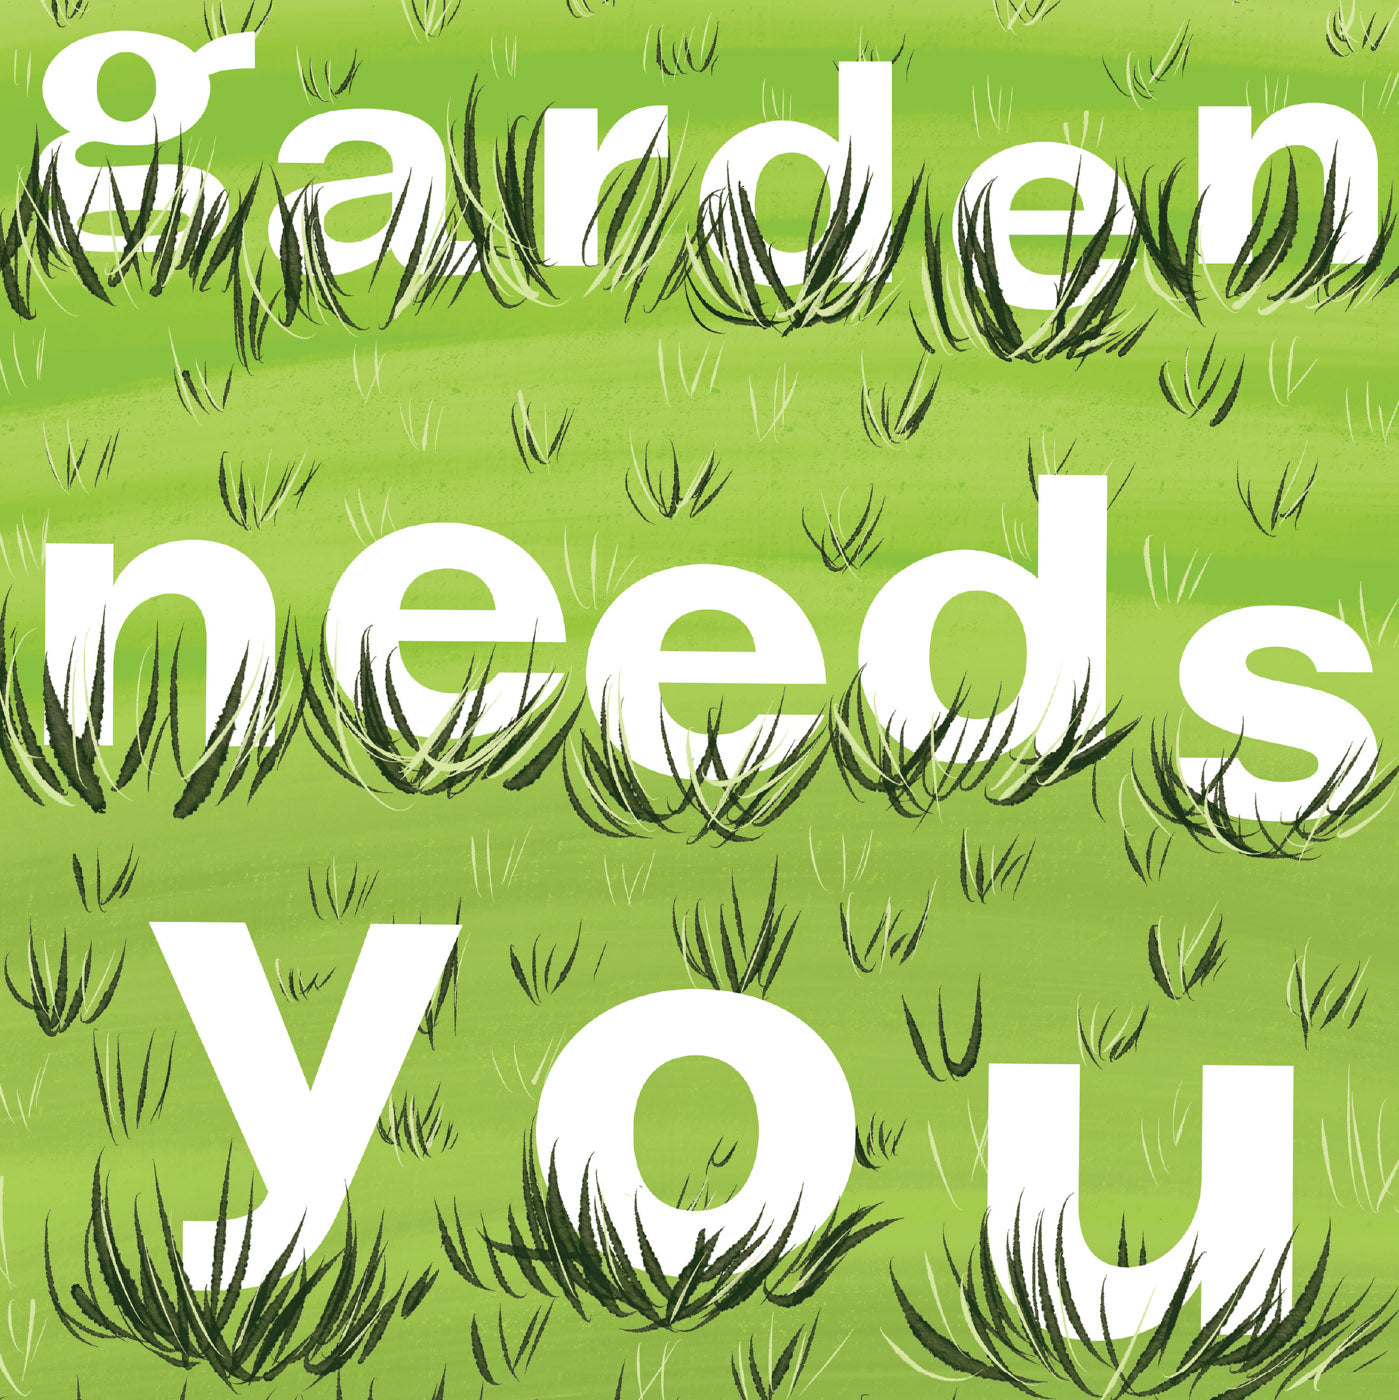 Your Garden Needs You - Gardening Poster